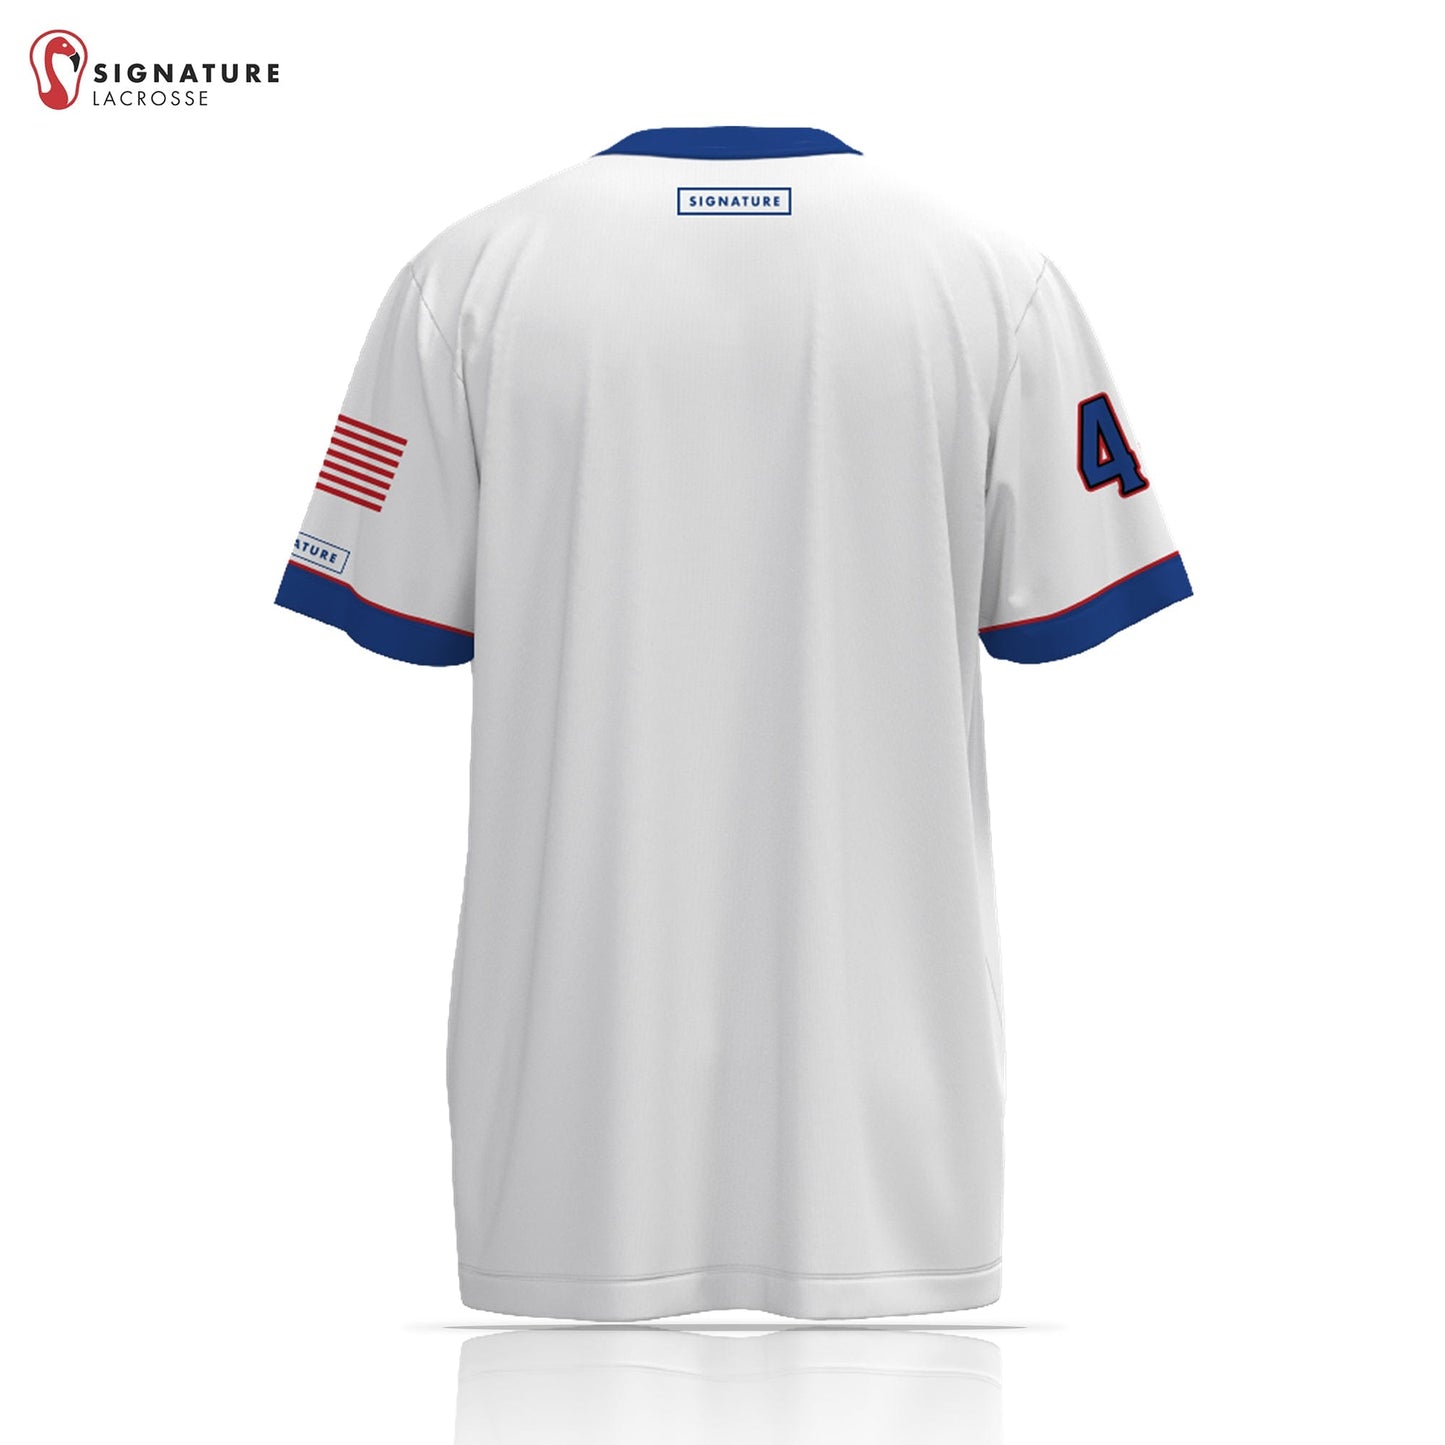 Freedom MS Lacrosse Men’s Short Sleeve Shooter Shirt Signature Lacrosse